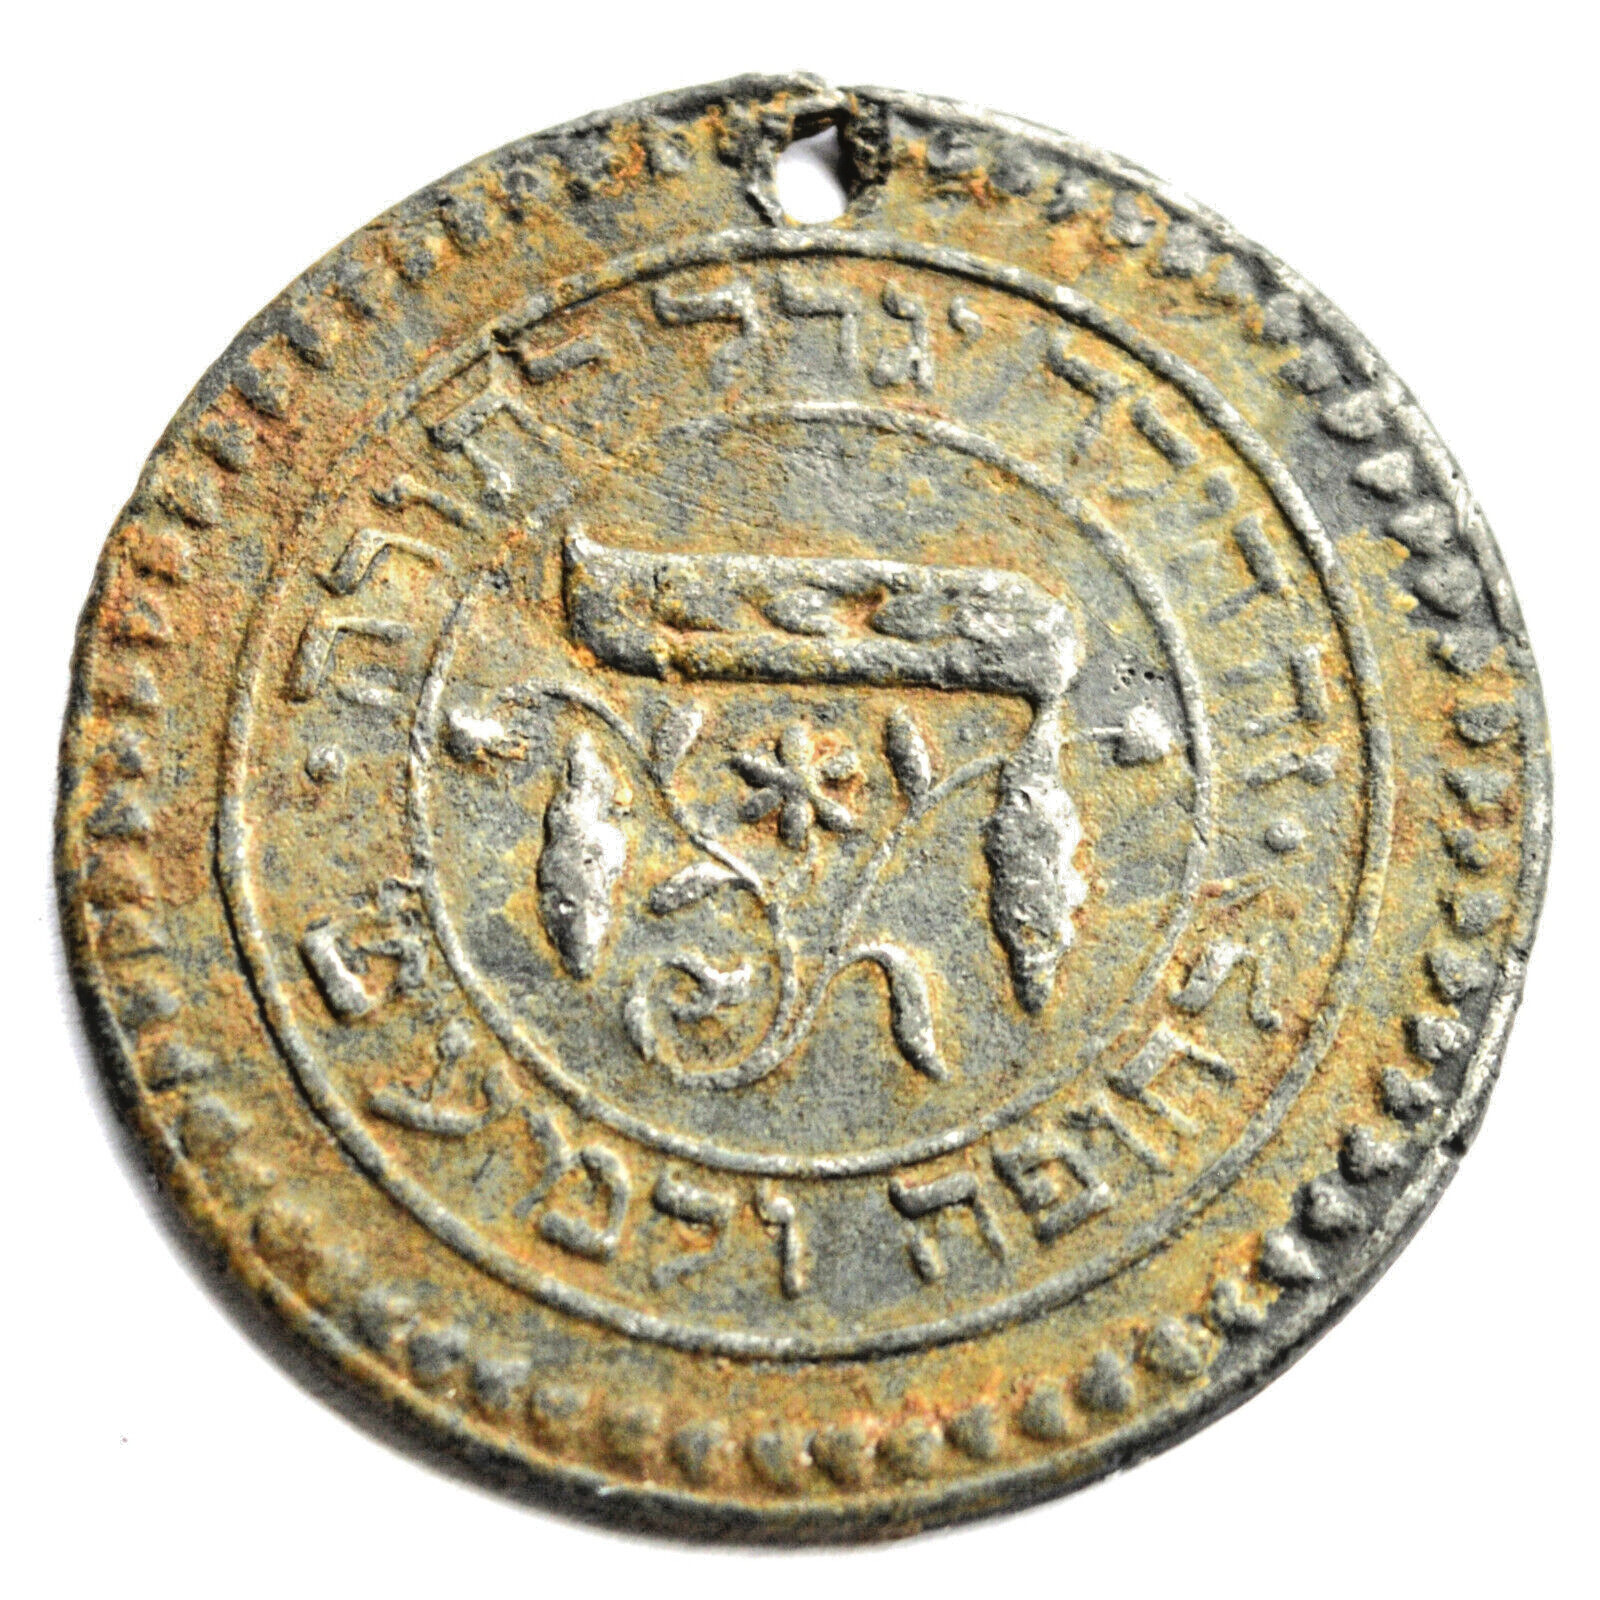 Antique judaica amulet for safeguarding a child europe kamea kabbalah 18-19th